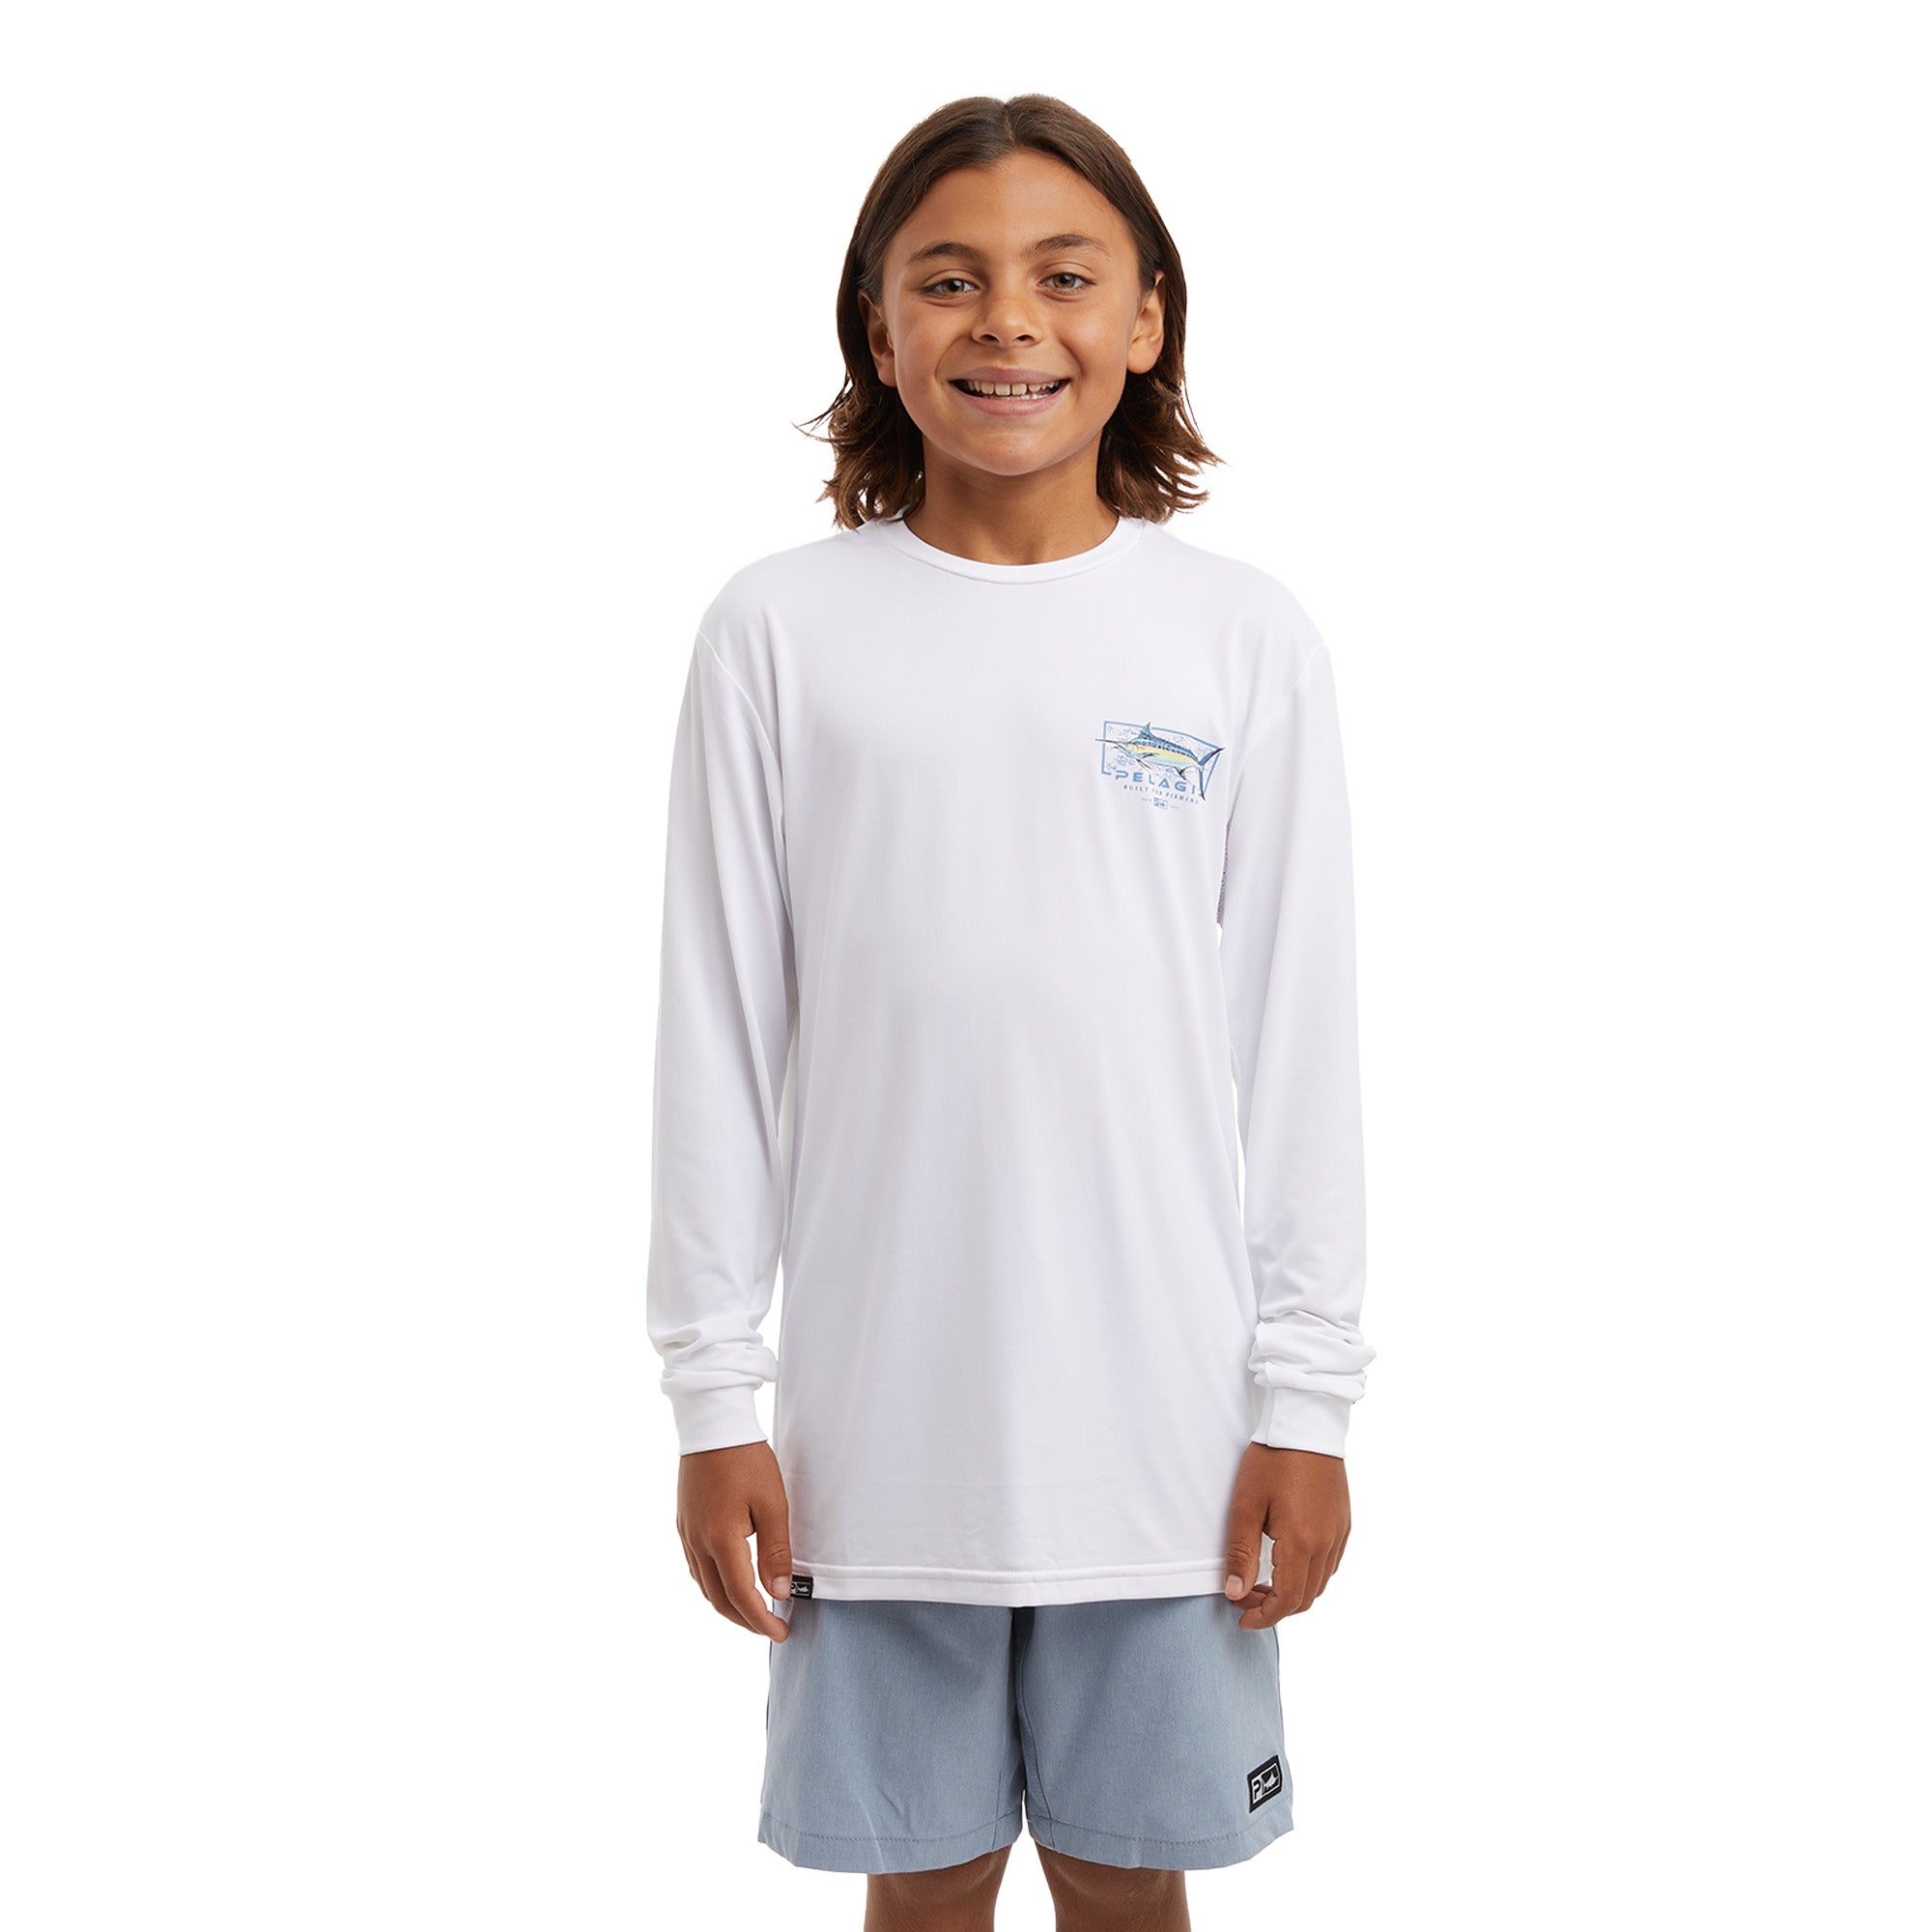 Pelagic Aquatek Marlin Mind Youth Fishing Shirt White / S